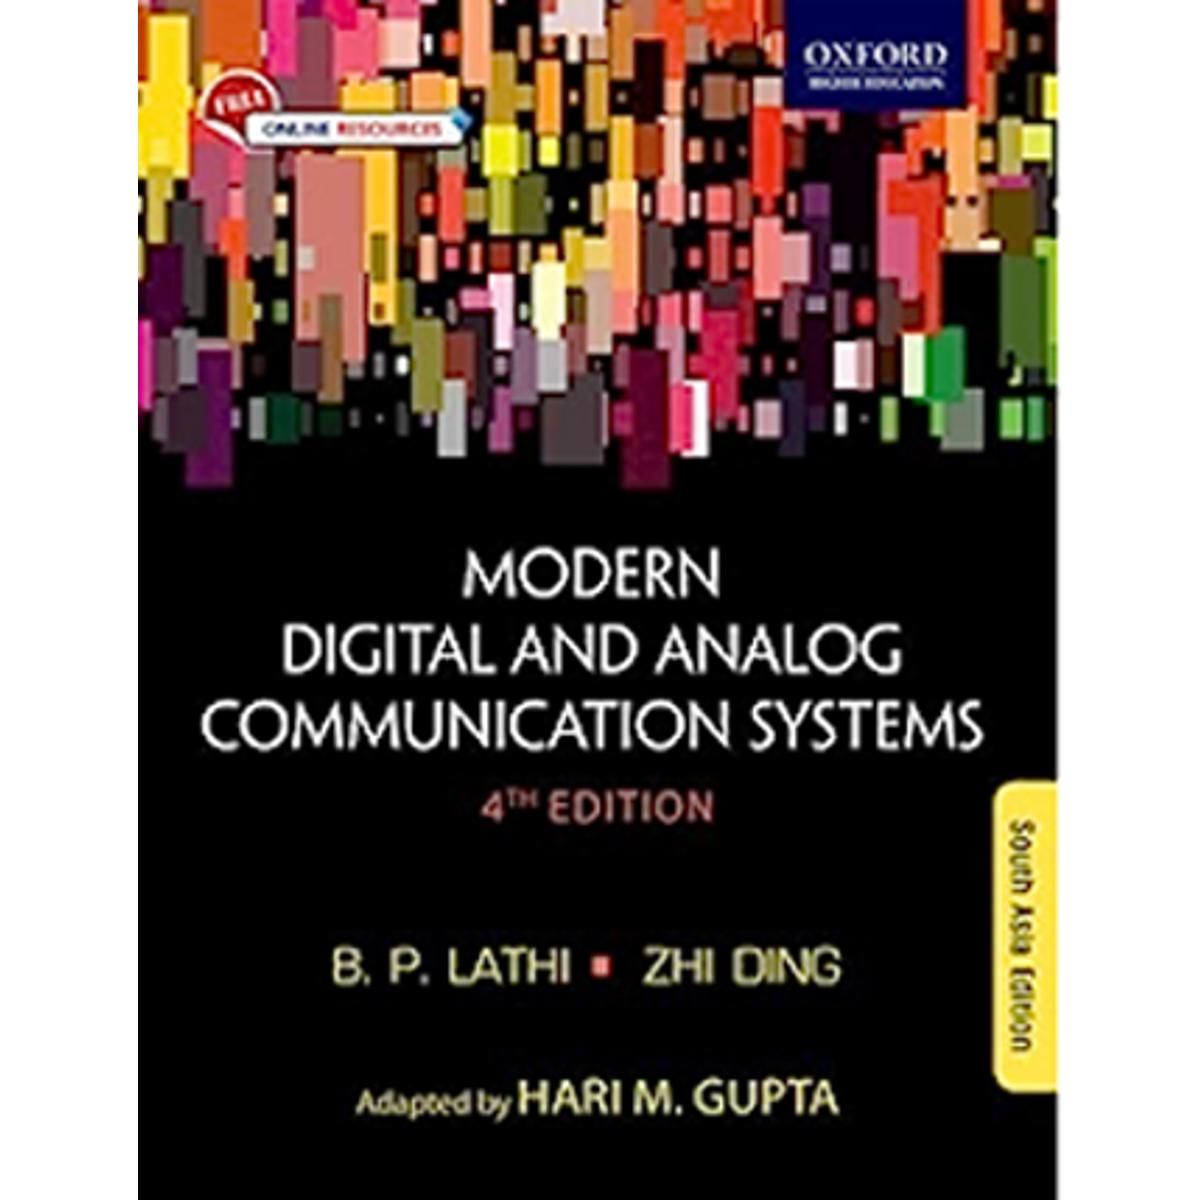 modern digi. and analog communication systems by B.P. Lathi